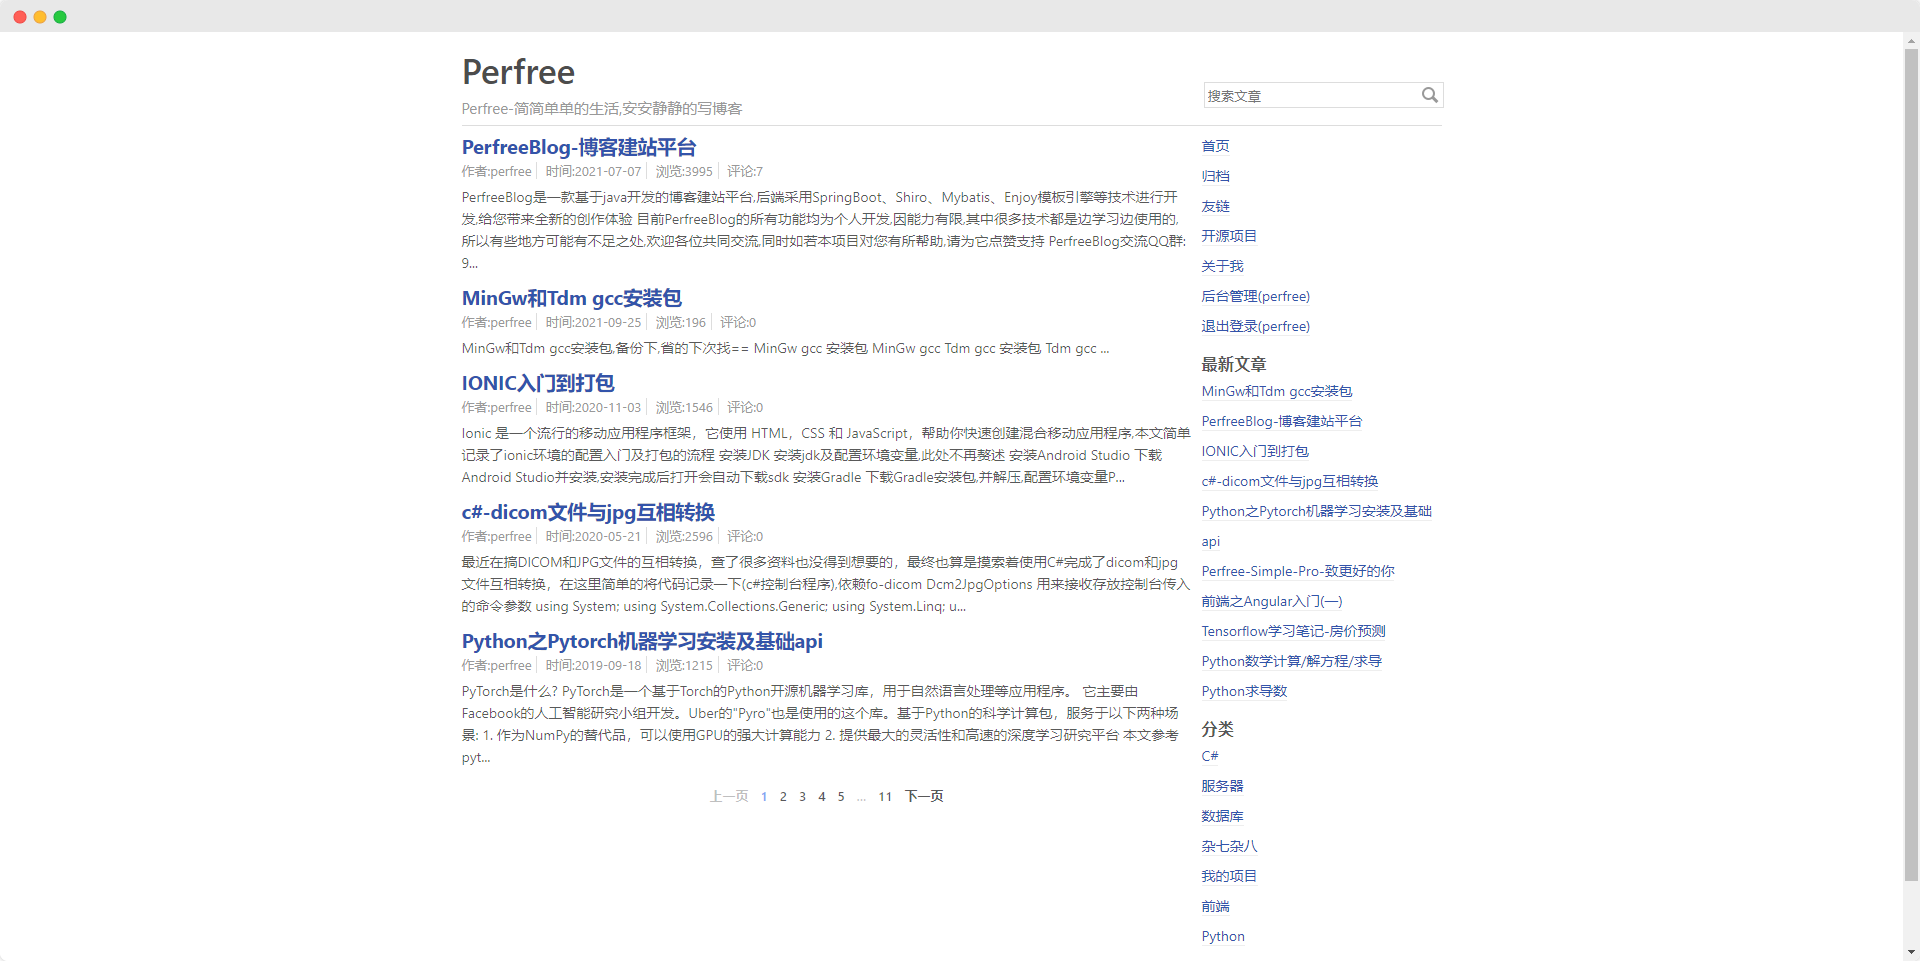 PerfreeBlog 博客建站平台更新至 v1.3.2